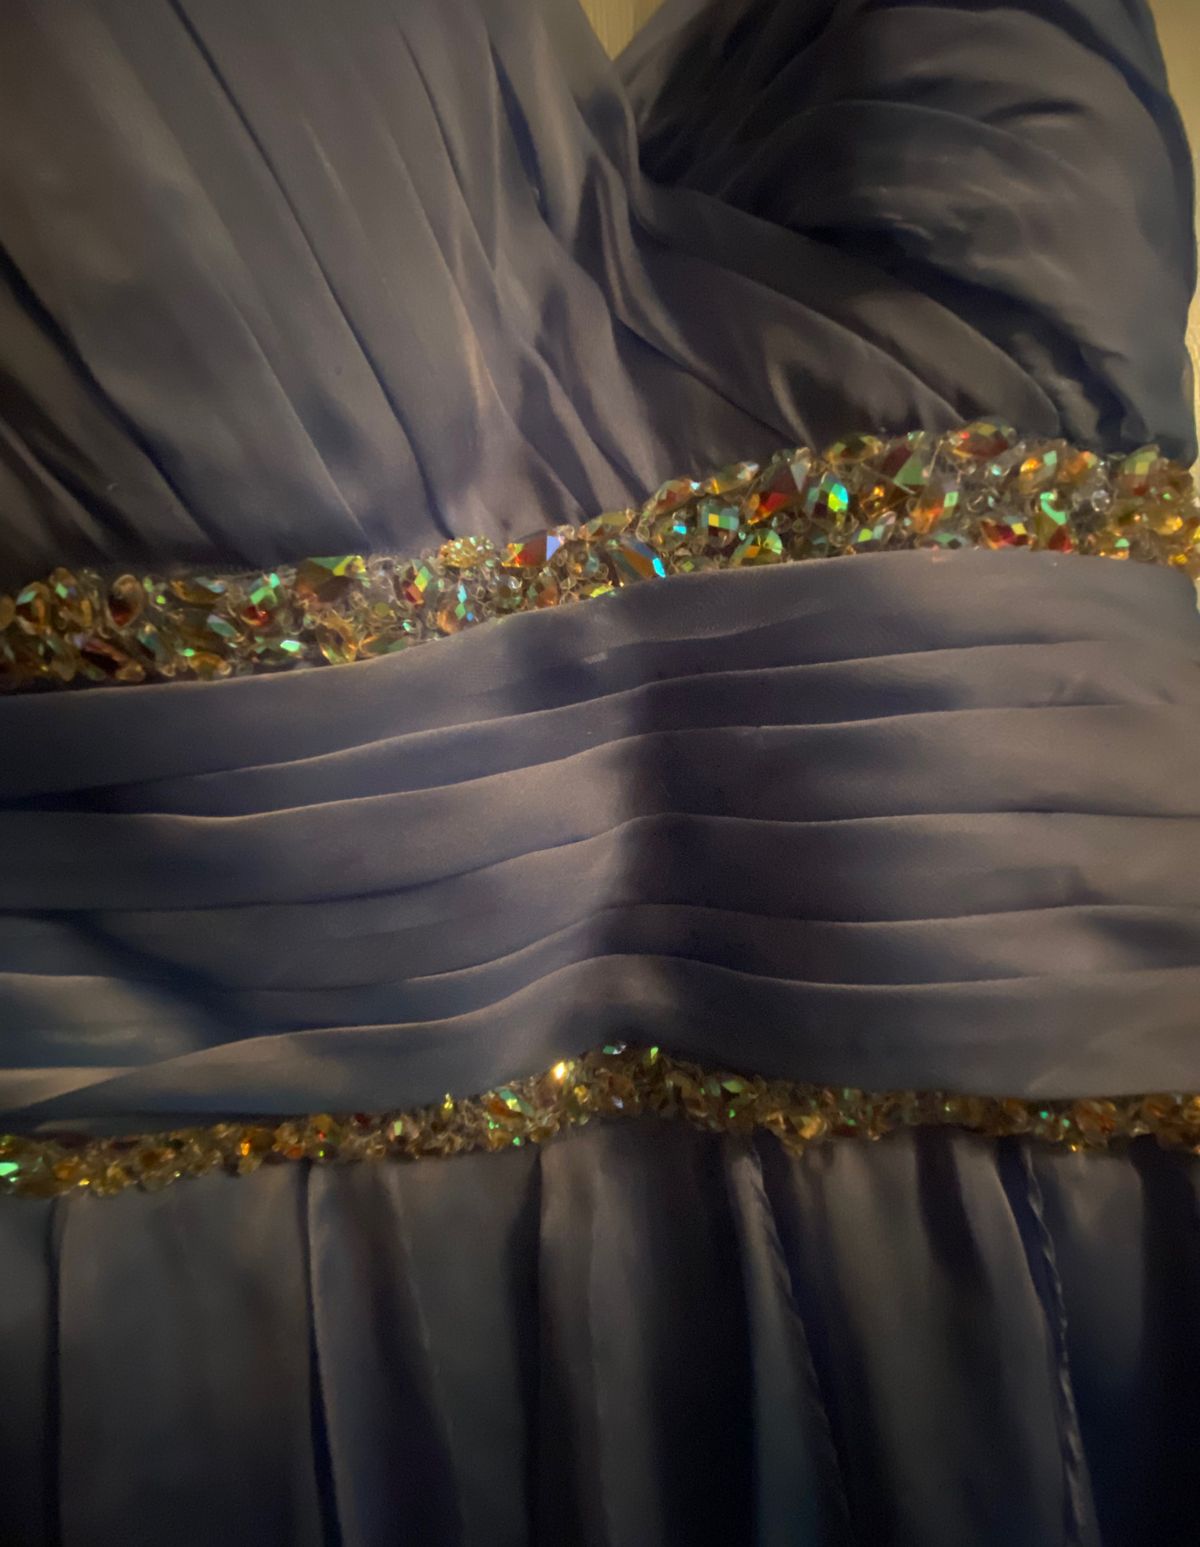 La Femme Size 4 Prom One Shoulder Sequined Light Blue Cocktail Dress on Queenly